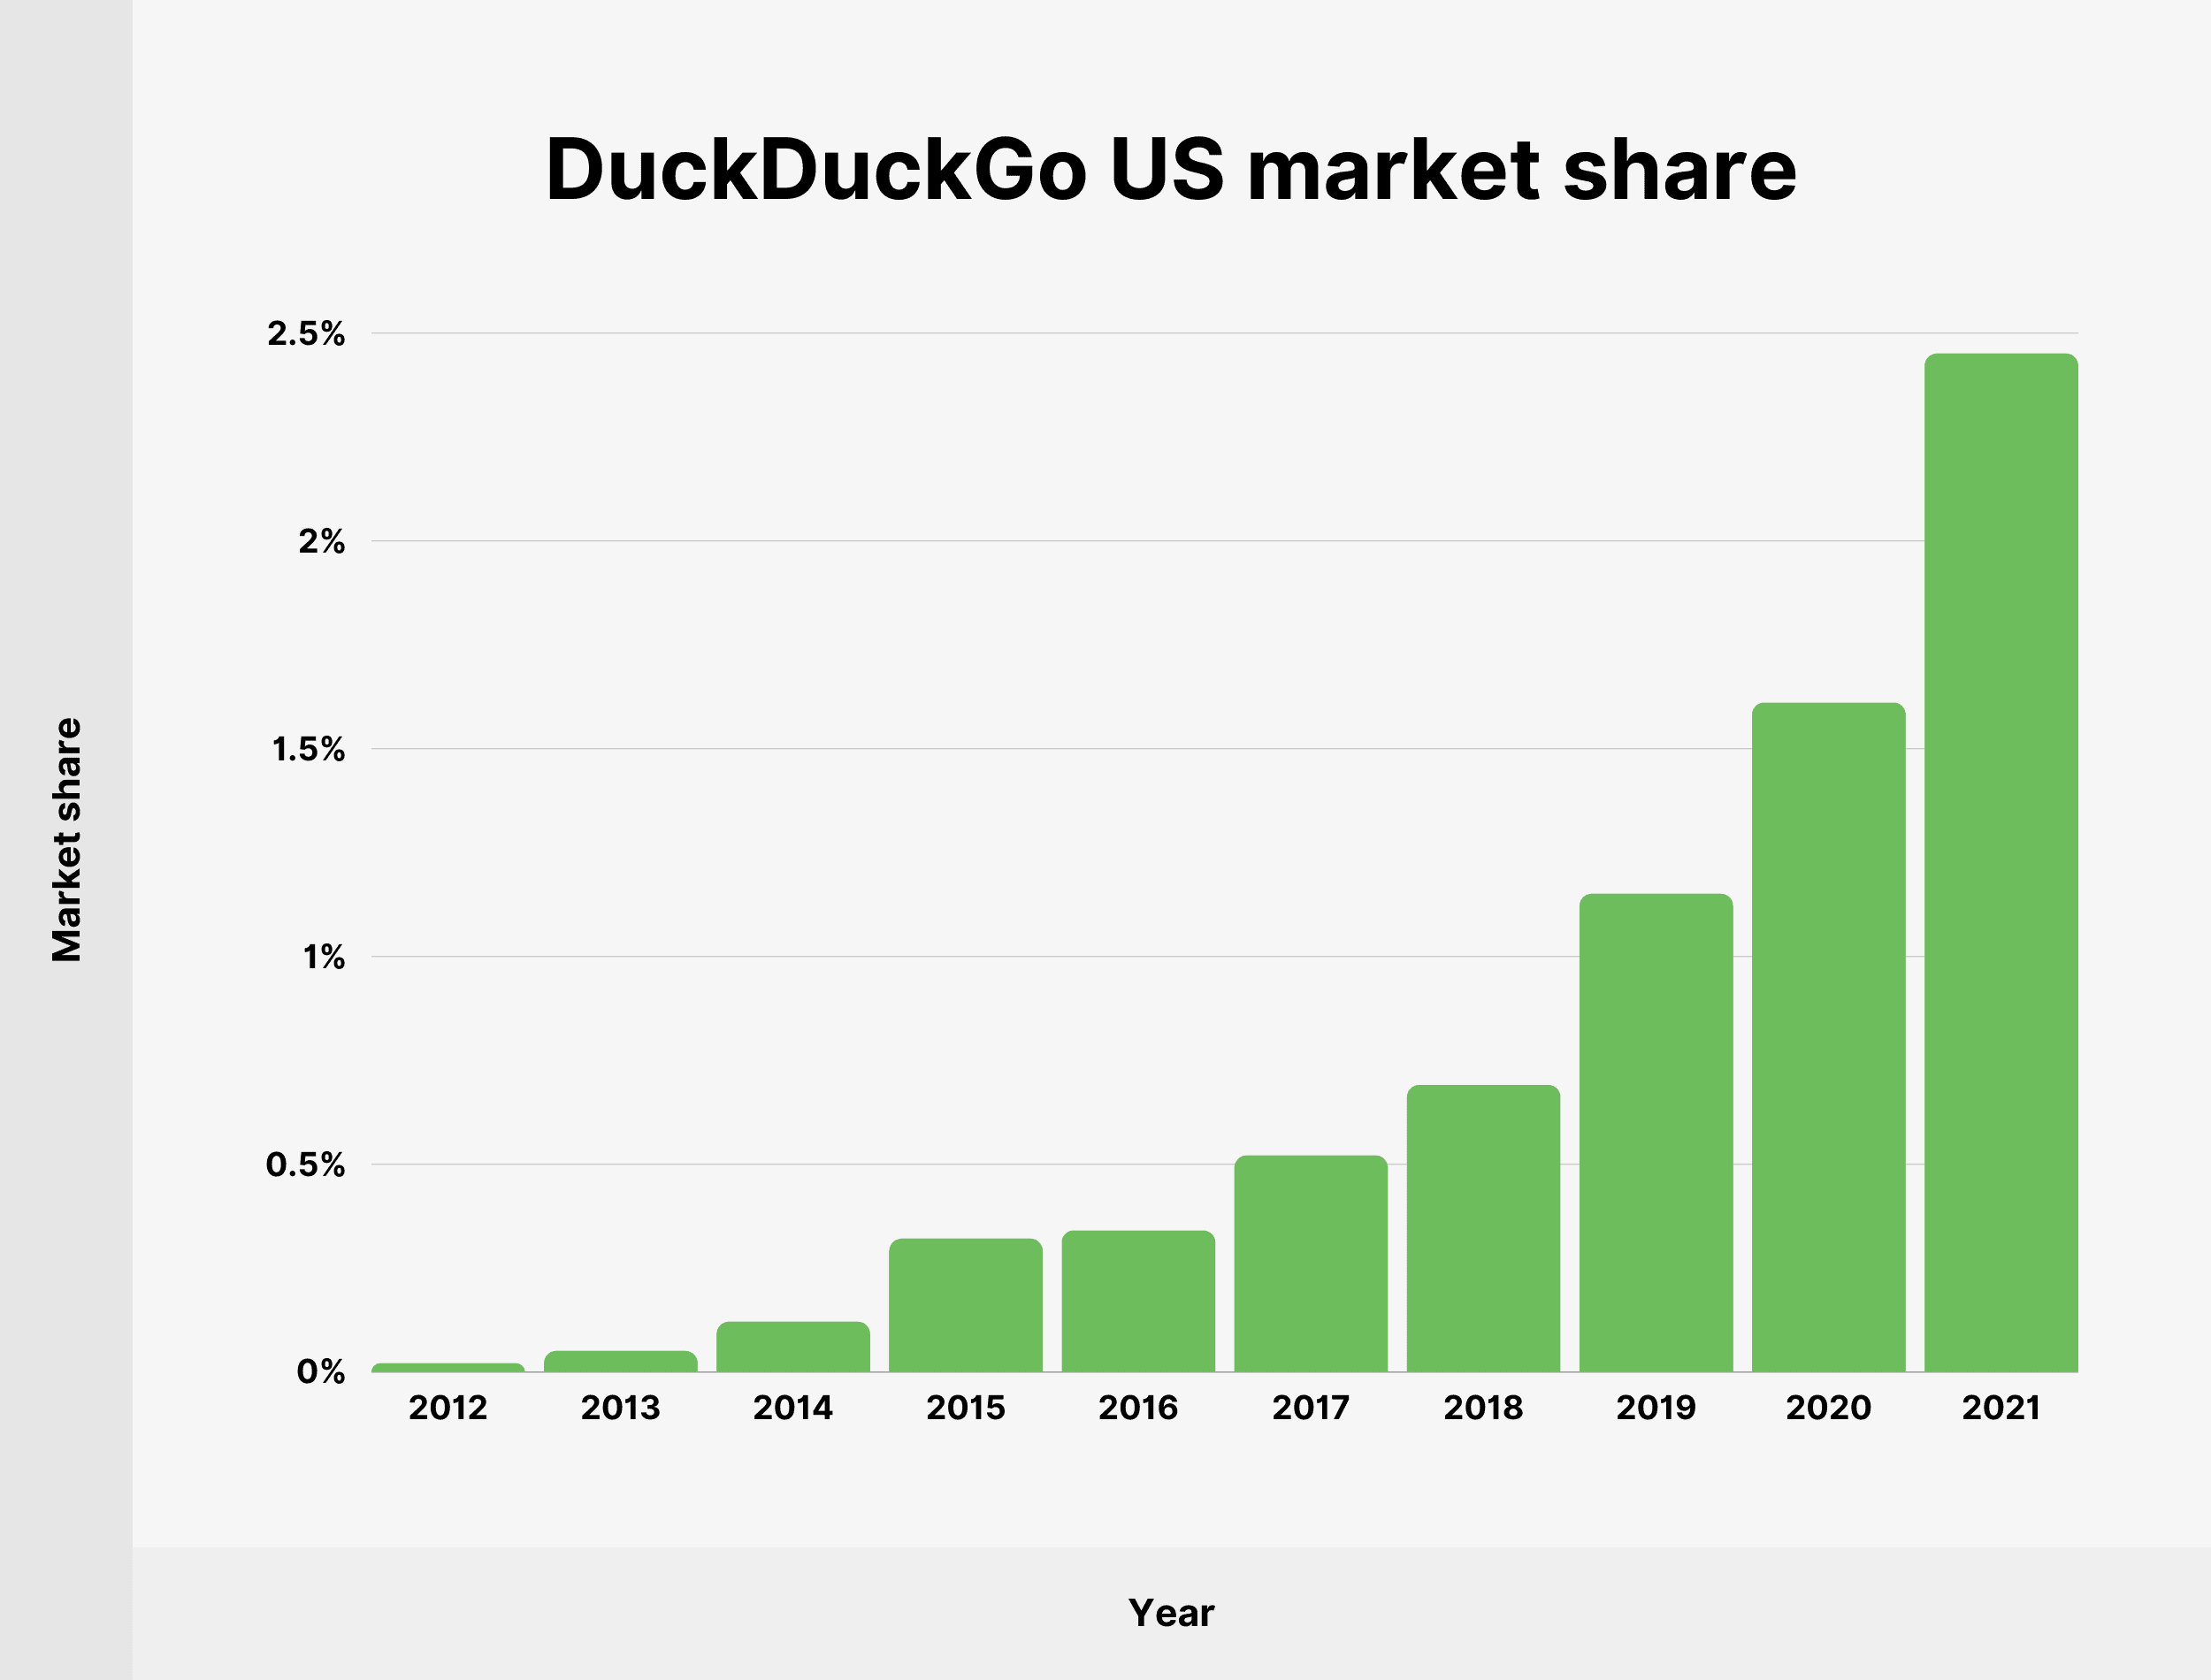 DuckDuckGo US market share